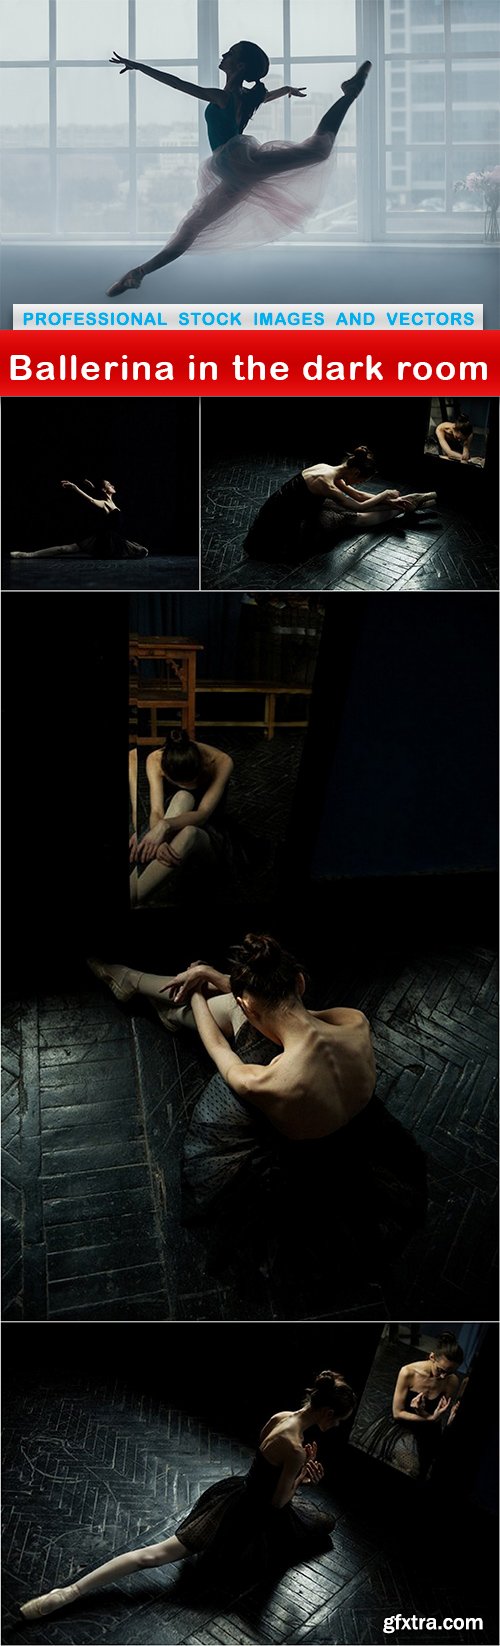 Ballerina in the dark room - 5 UHQ JPEG